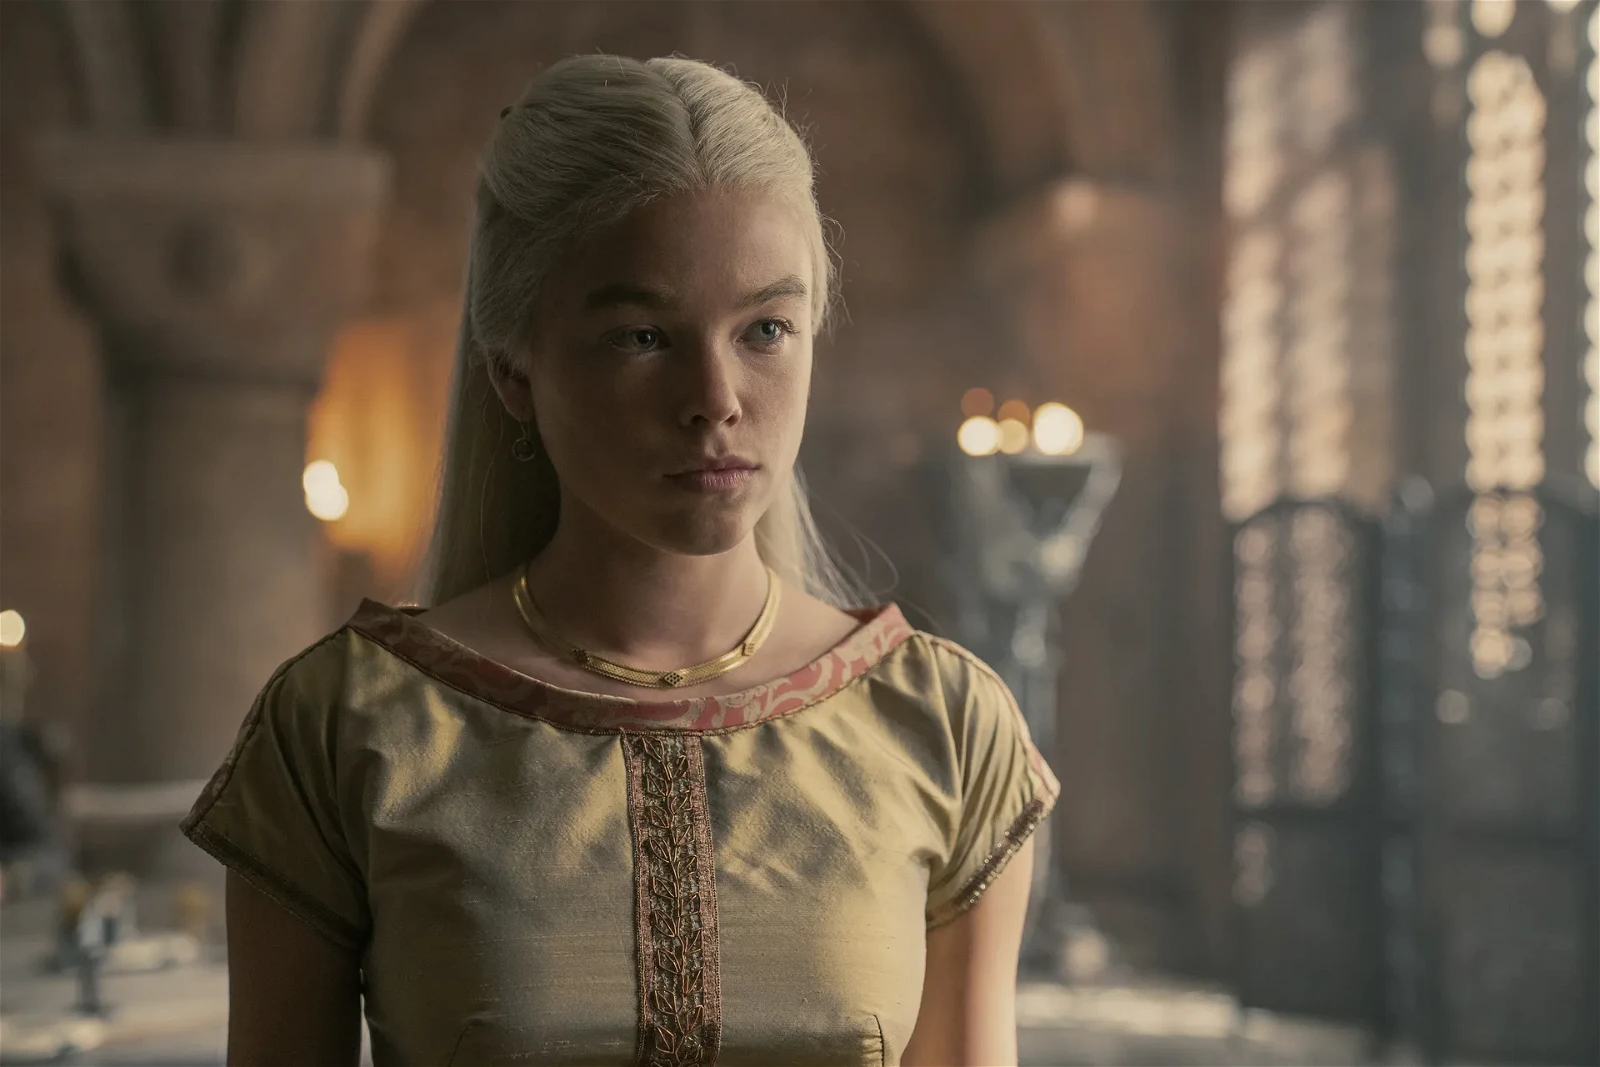 Milly Alcock as Rhaenyra Targaryen in House of the Dragon (2022-).